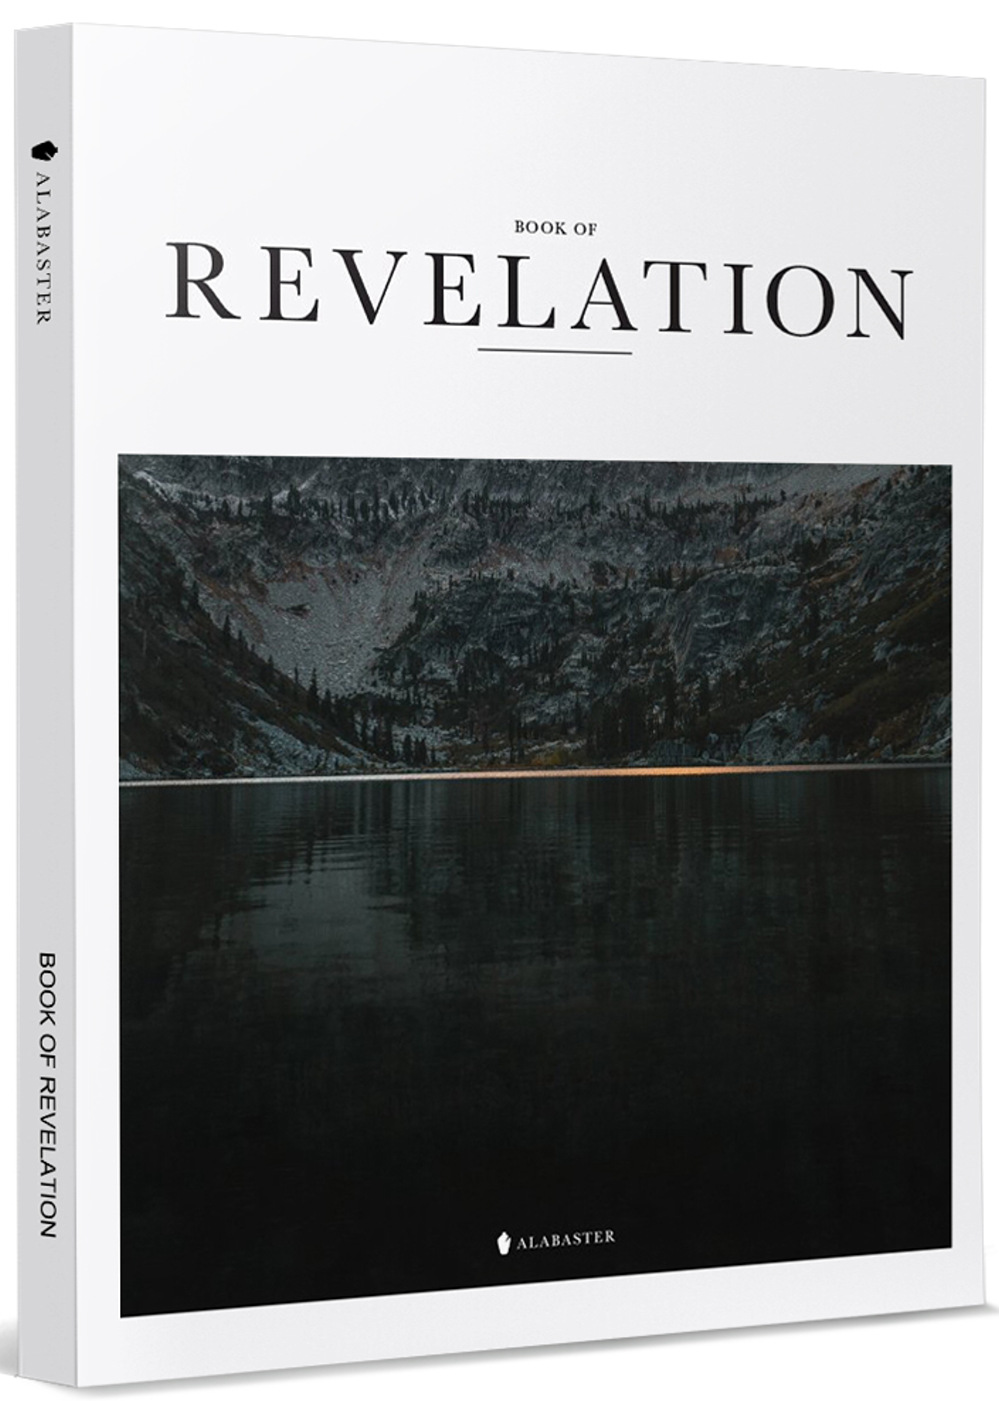 BOOK OF REVELATION(New Living Translation)